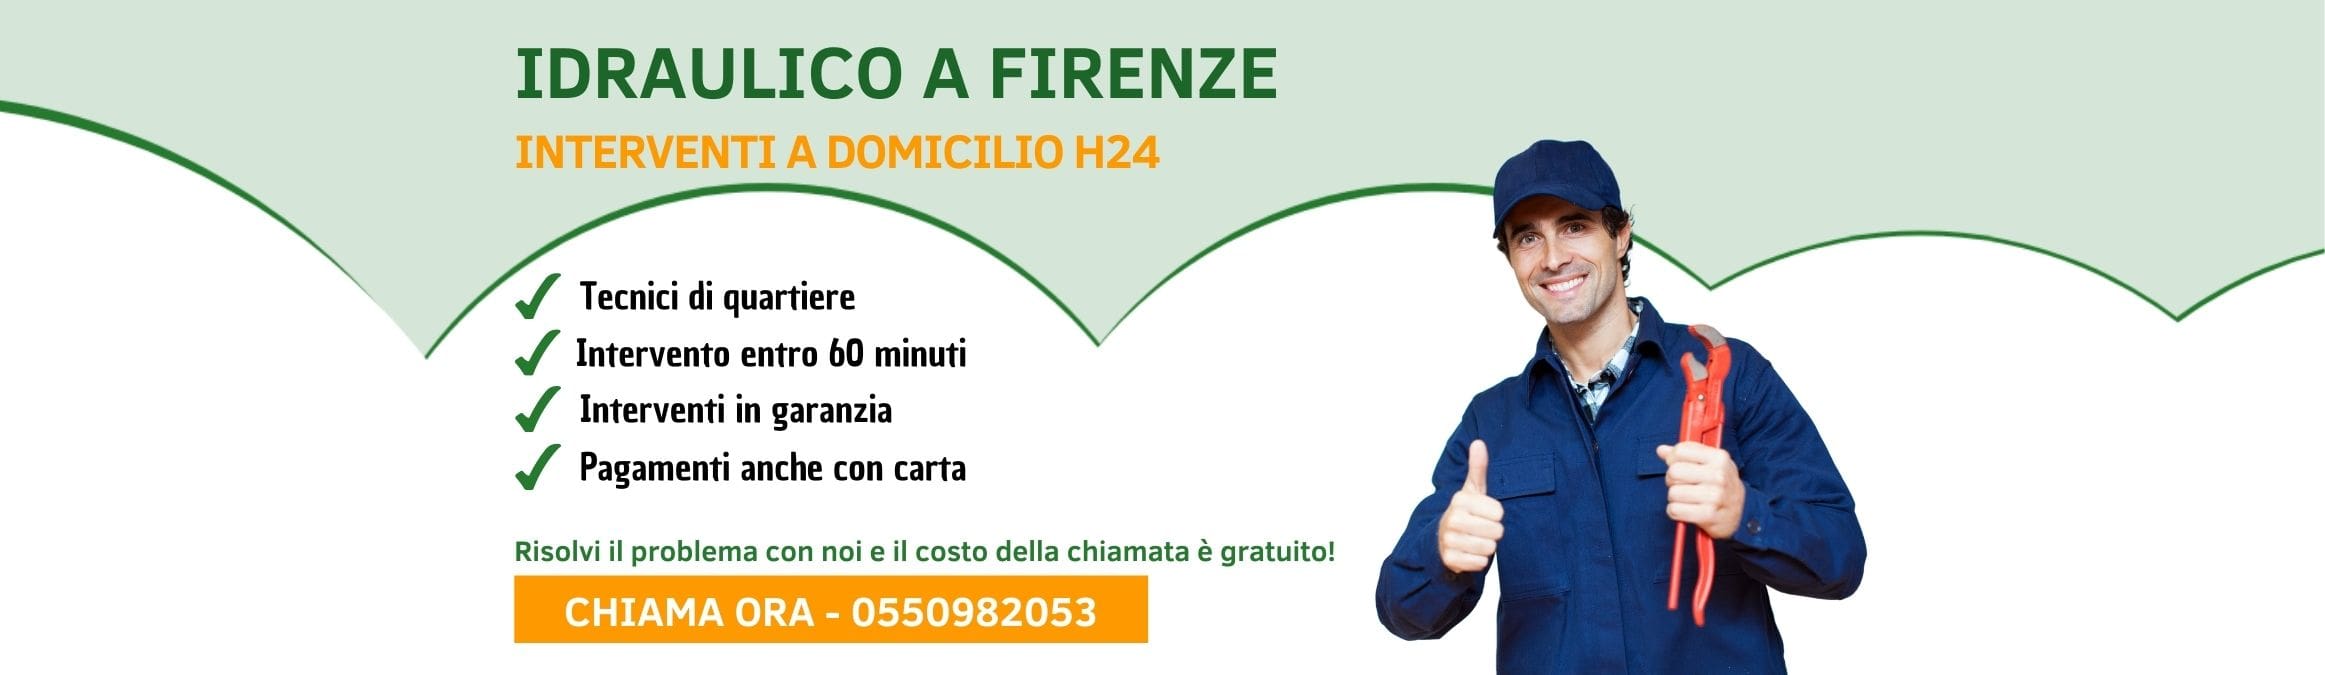 Idraulico Firenze - Pronto Intervento Idraulico h24